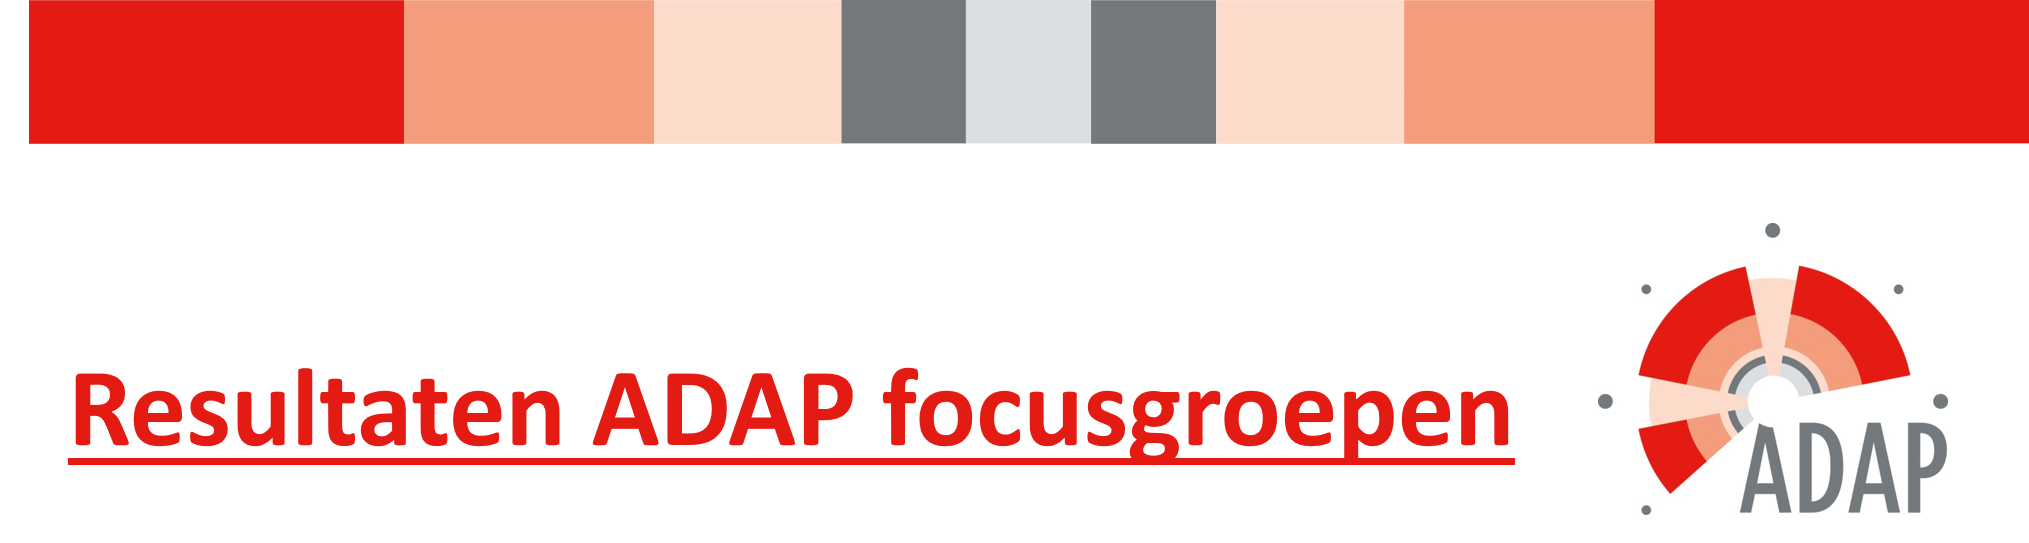 resultaten ADAP focusgroepen.png